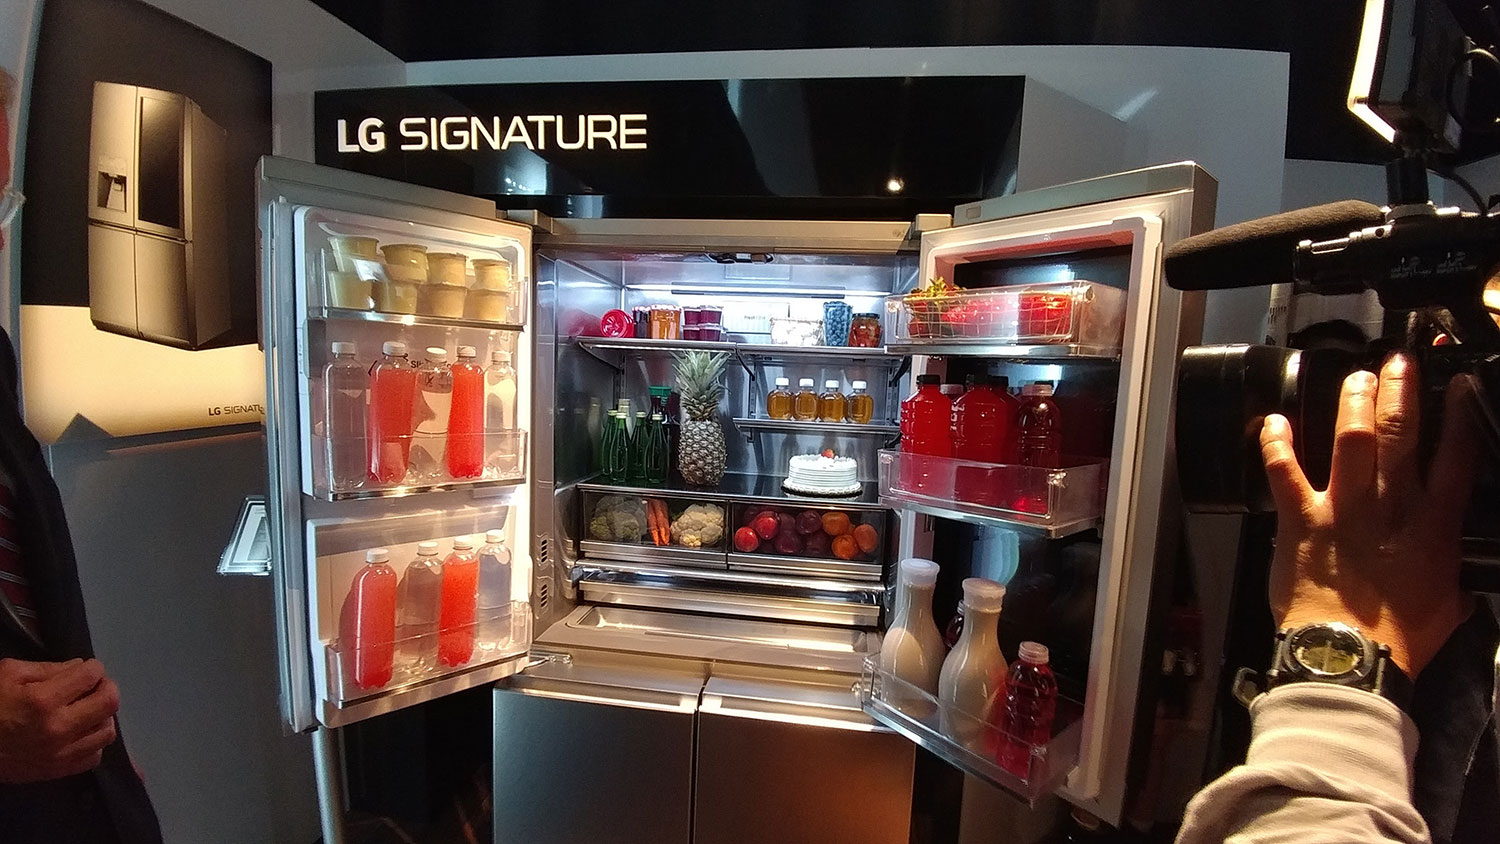 LG Signature Gallery at Rockefeller Center